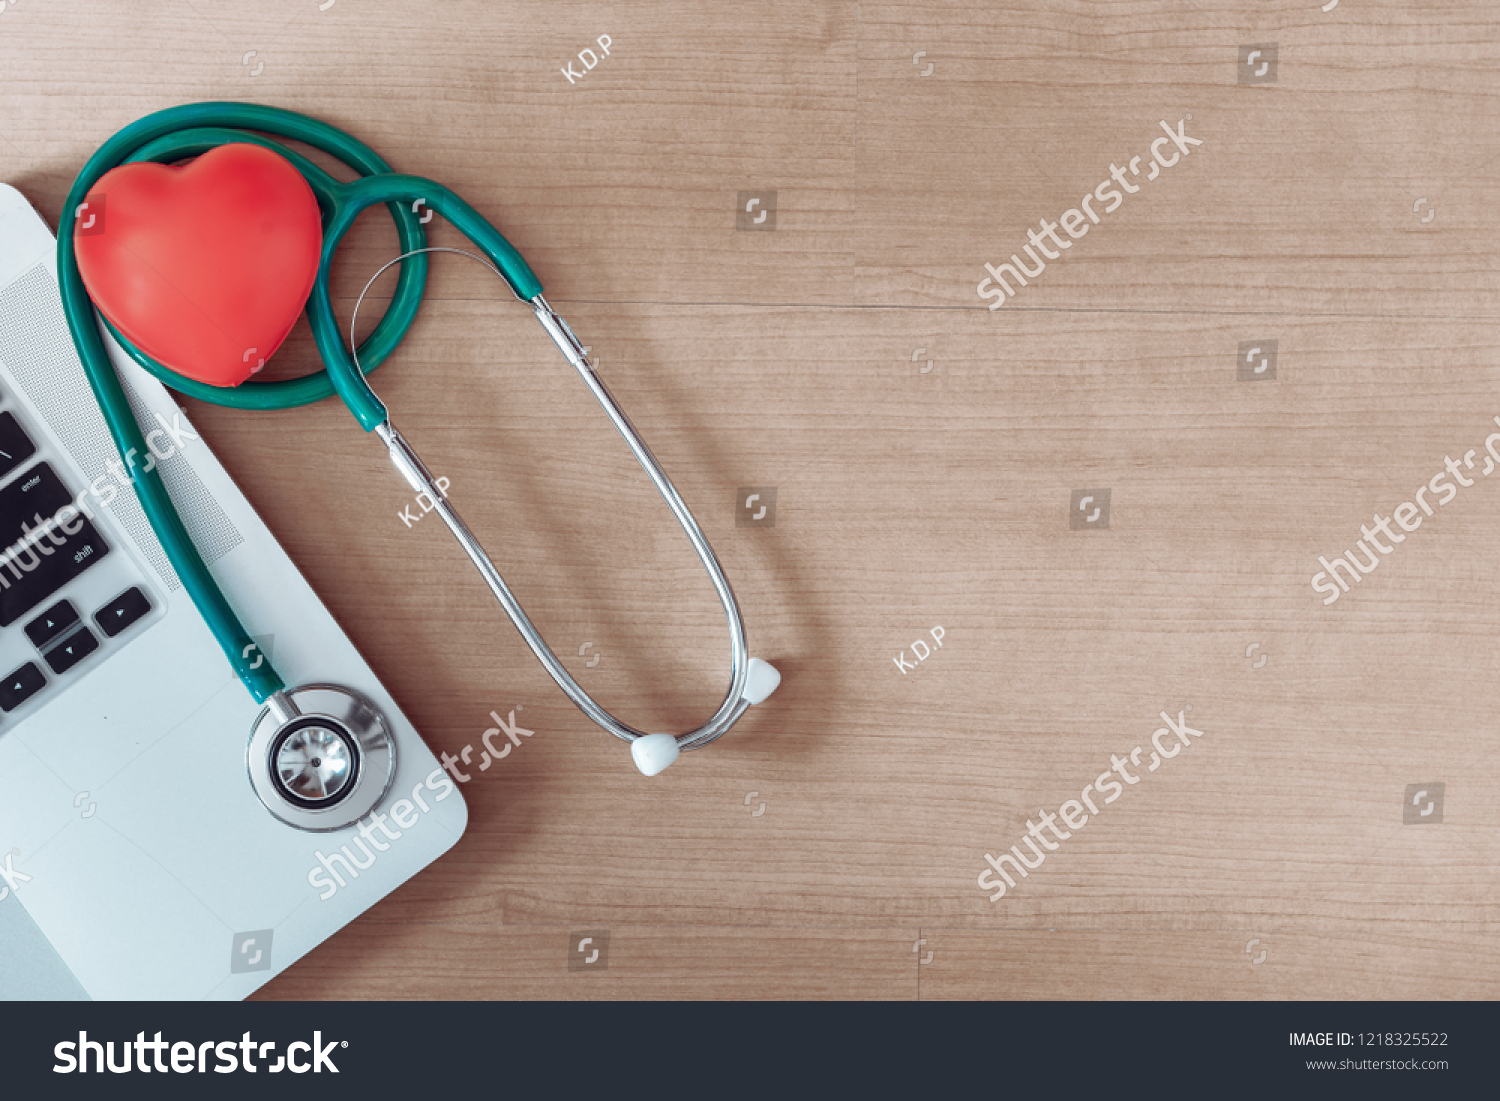 personal stethoscope